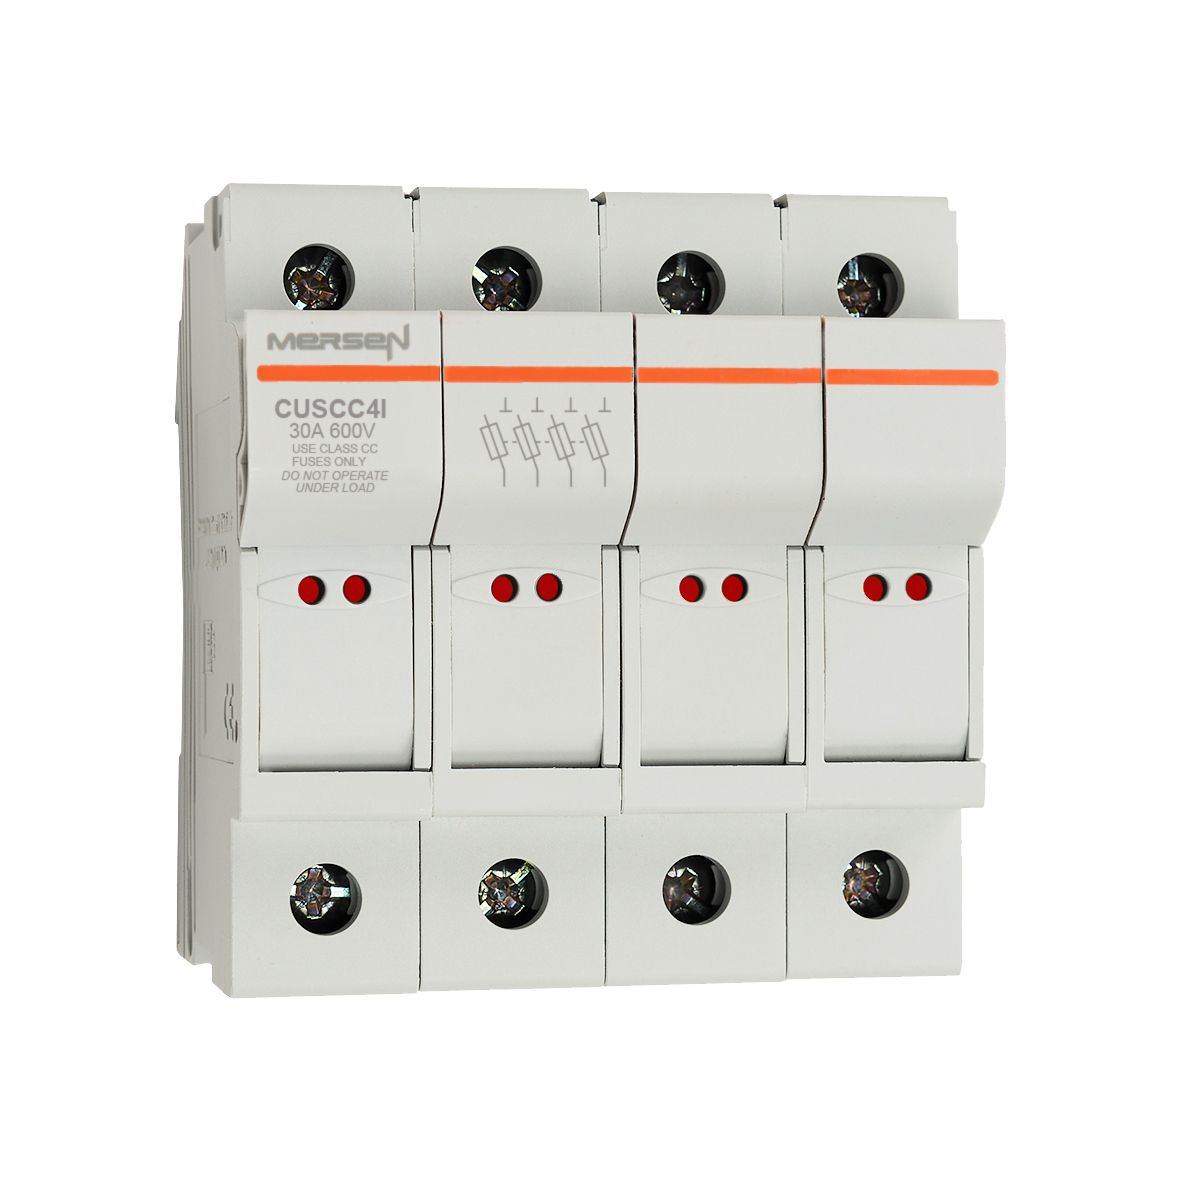 F1062789 - modular fuse holder, UL, 4P, Class CC, DIN rail mounting, indicators, IP20